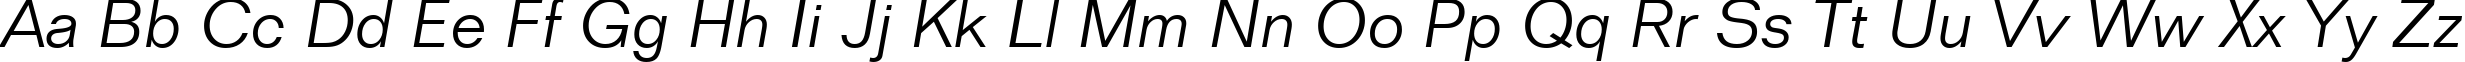 Пример написания английского алфавита шрифтом Folio Light Italic BT